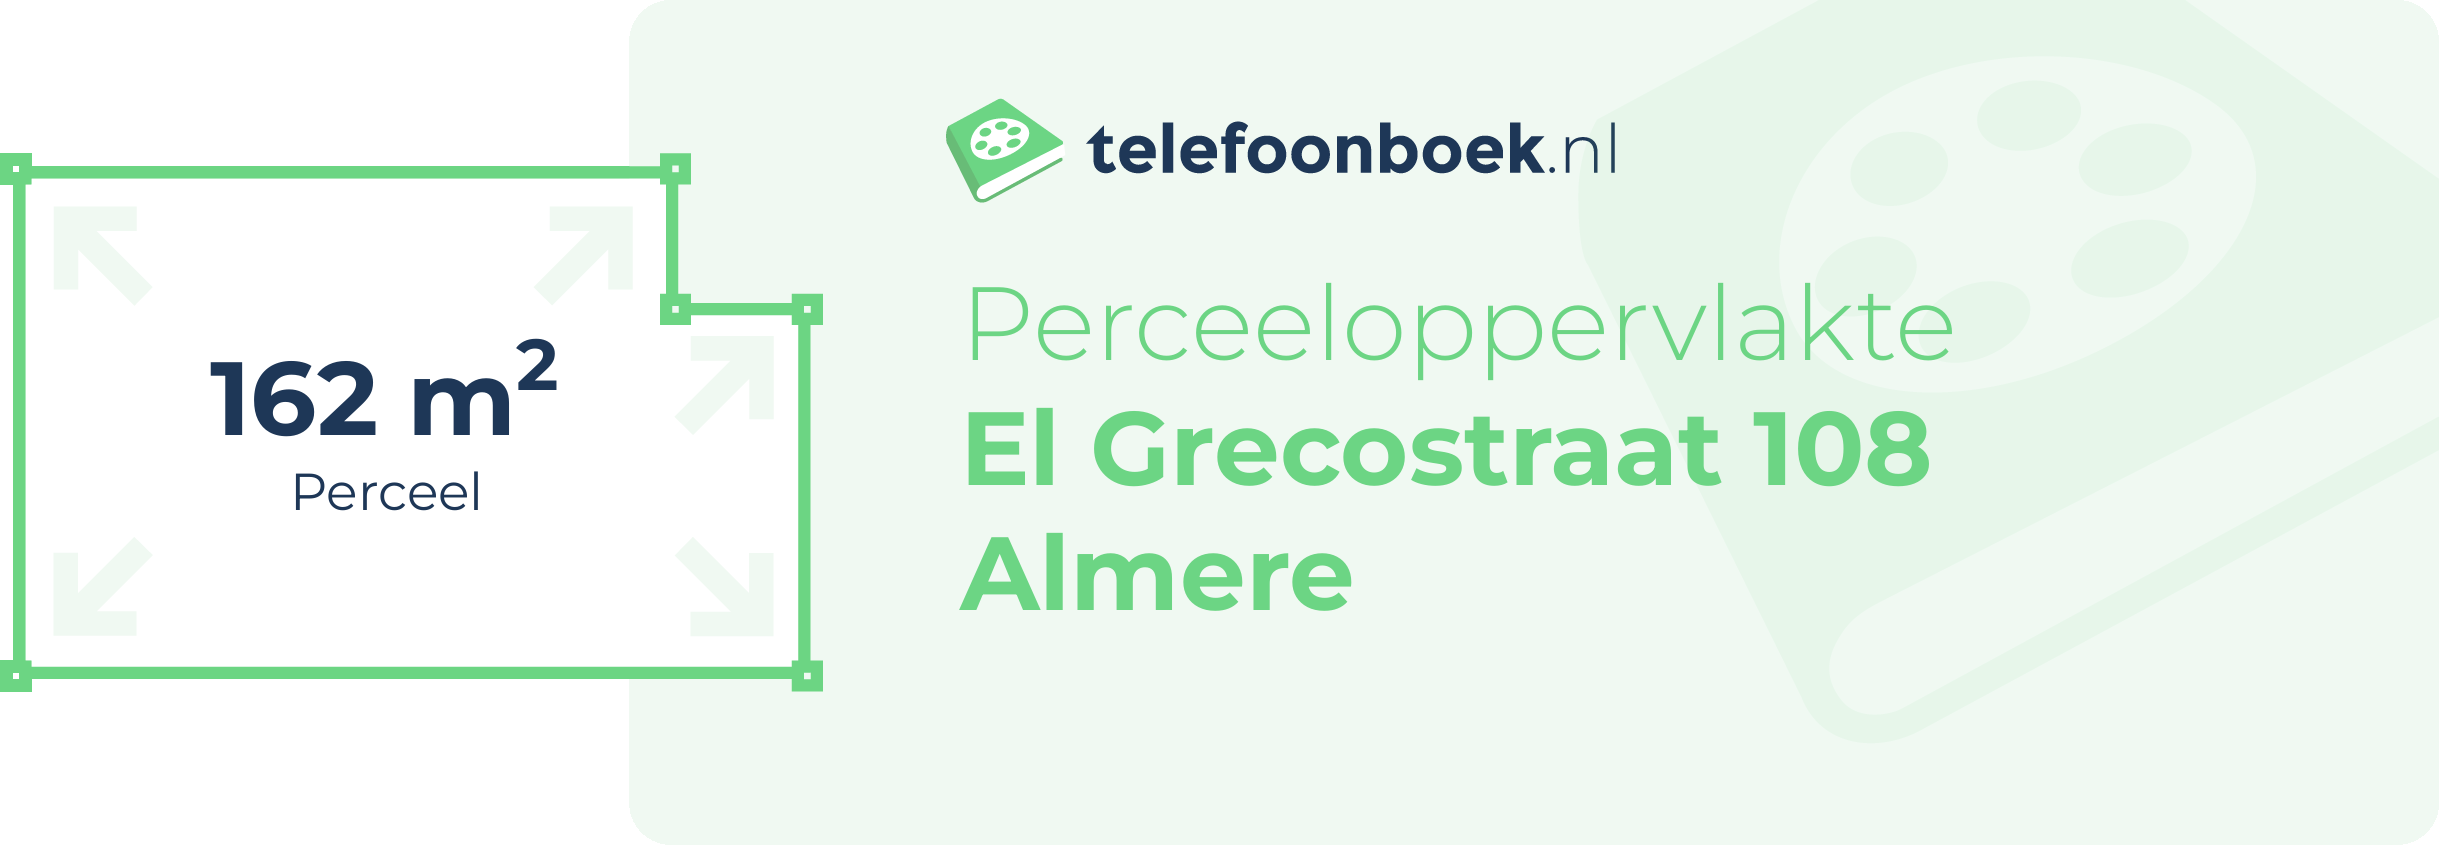 Perceeloppervlakte El Grecostraat 108 Almere